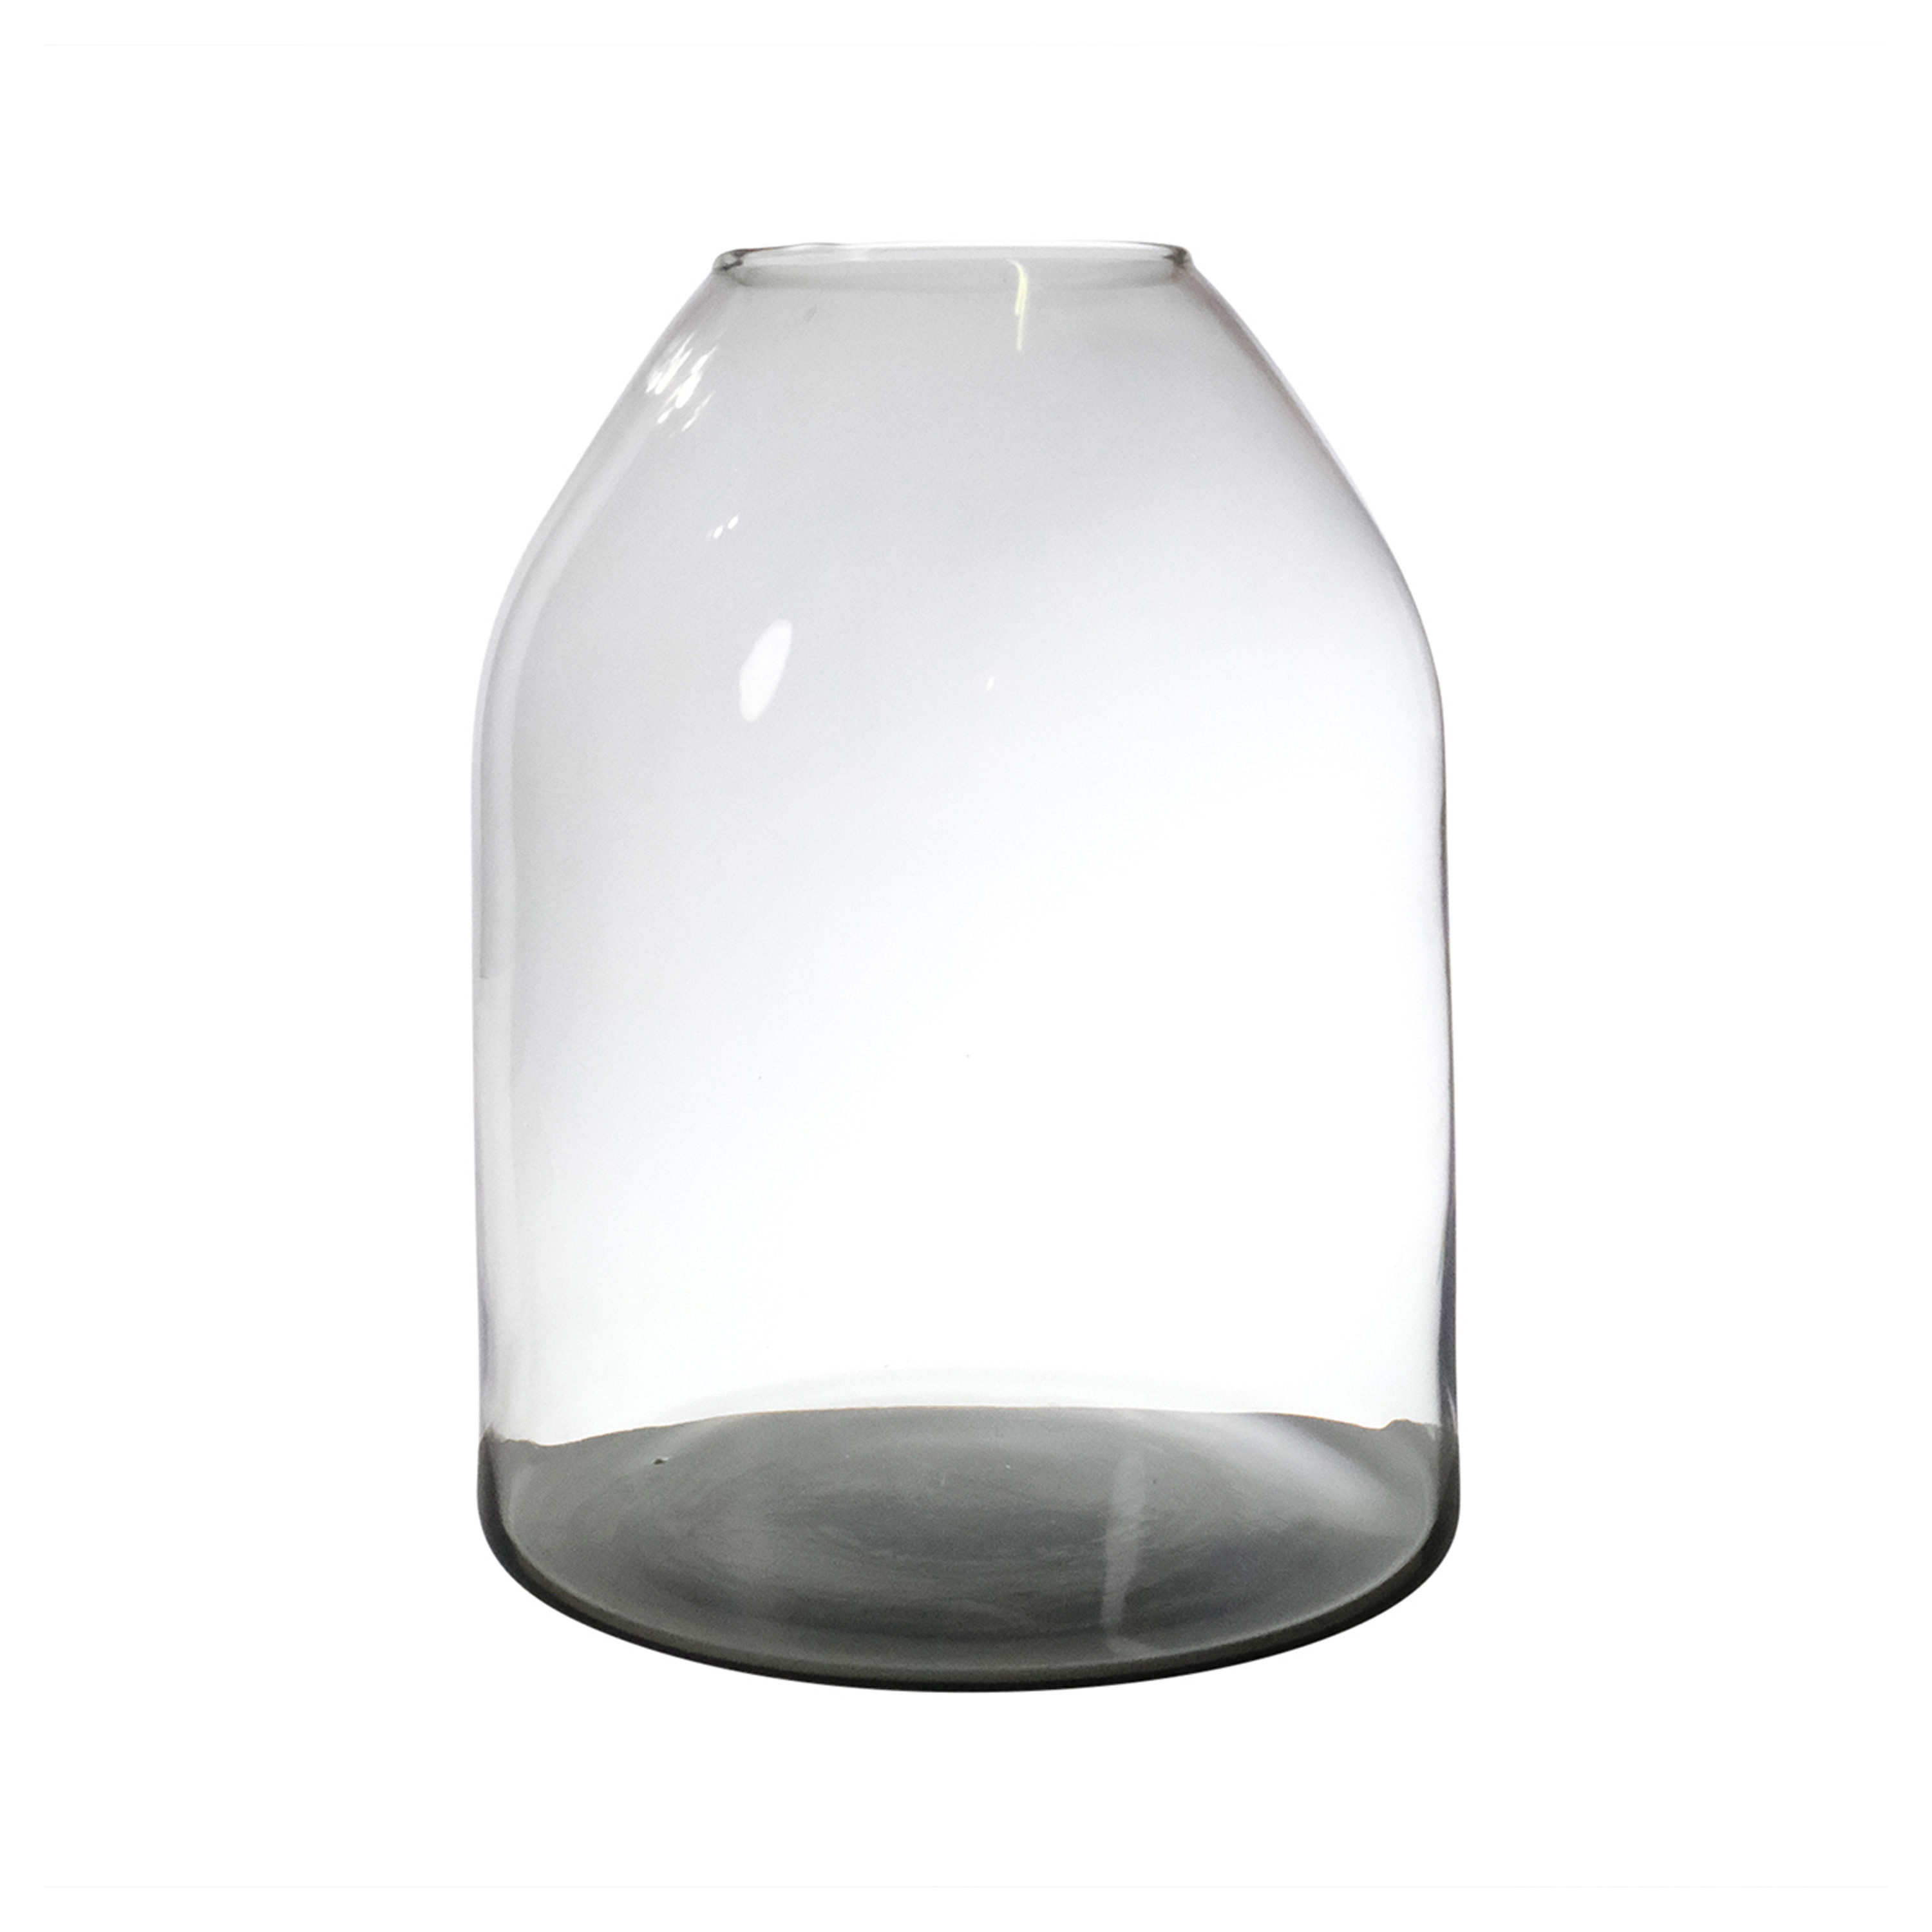 Hakbijl Glass Bloemenvaas Barcelona - transparant - eco glas - D19 x H25 cm -